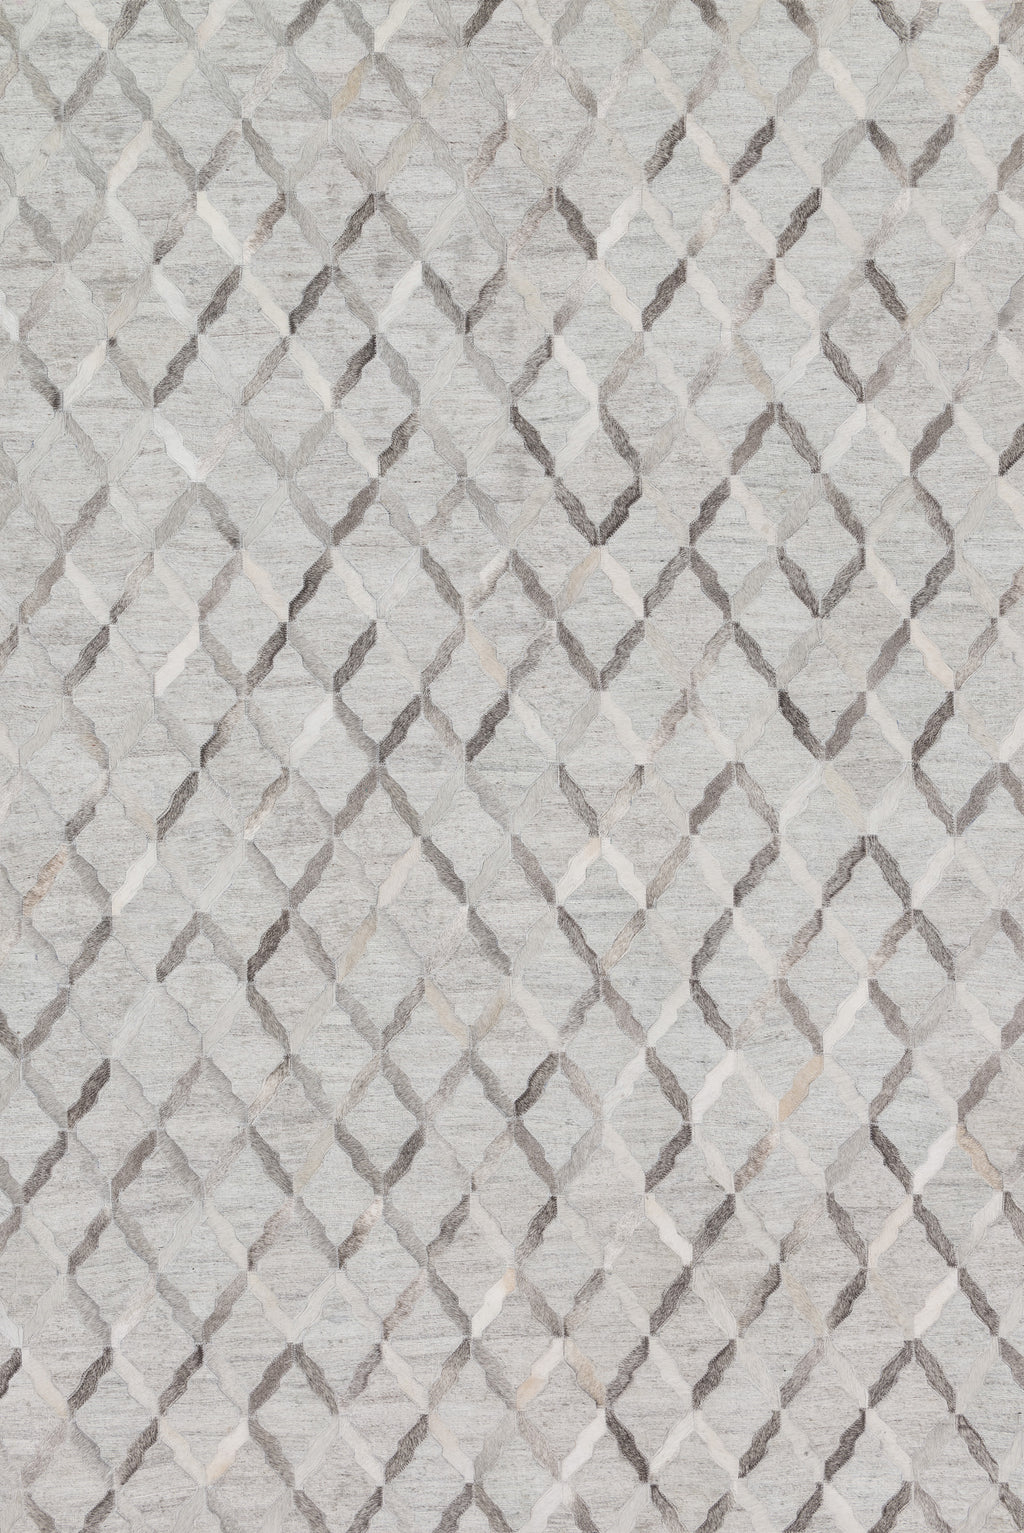 DORADO Collection Wool/Viscose Rug  in  GREY / GREY Gray Runner Hand-Loomed Wool/Viscose